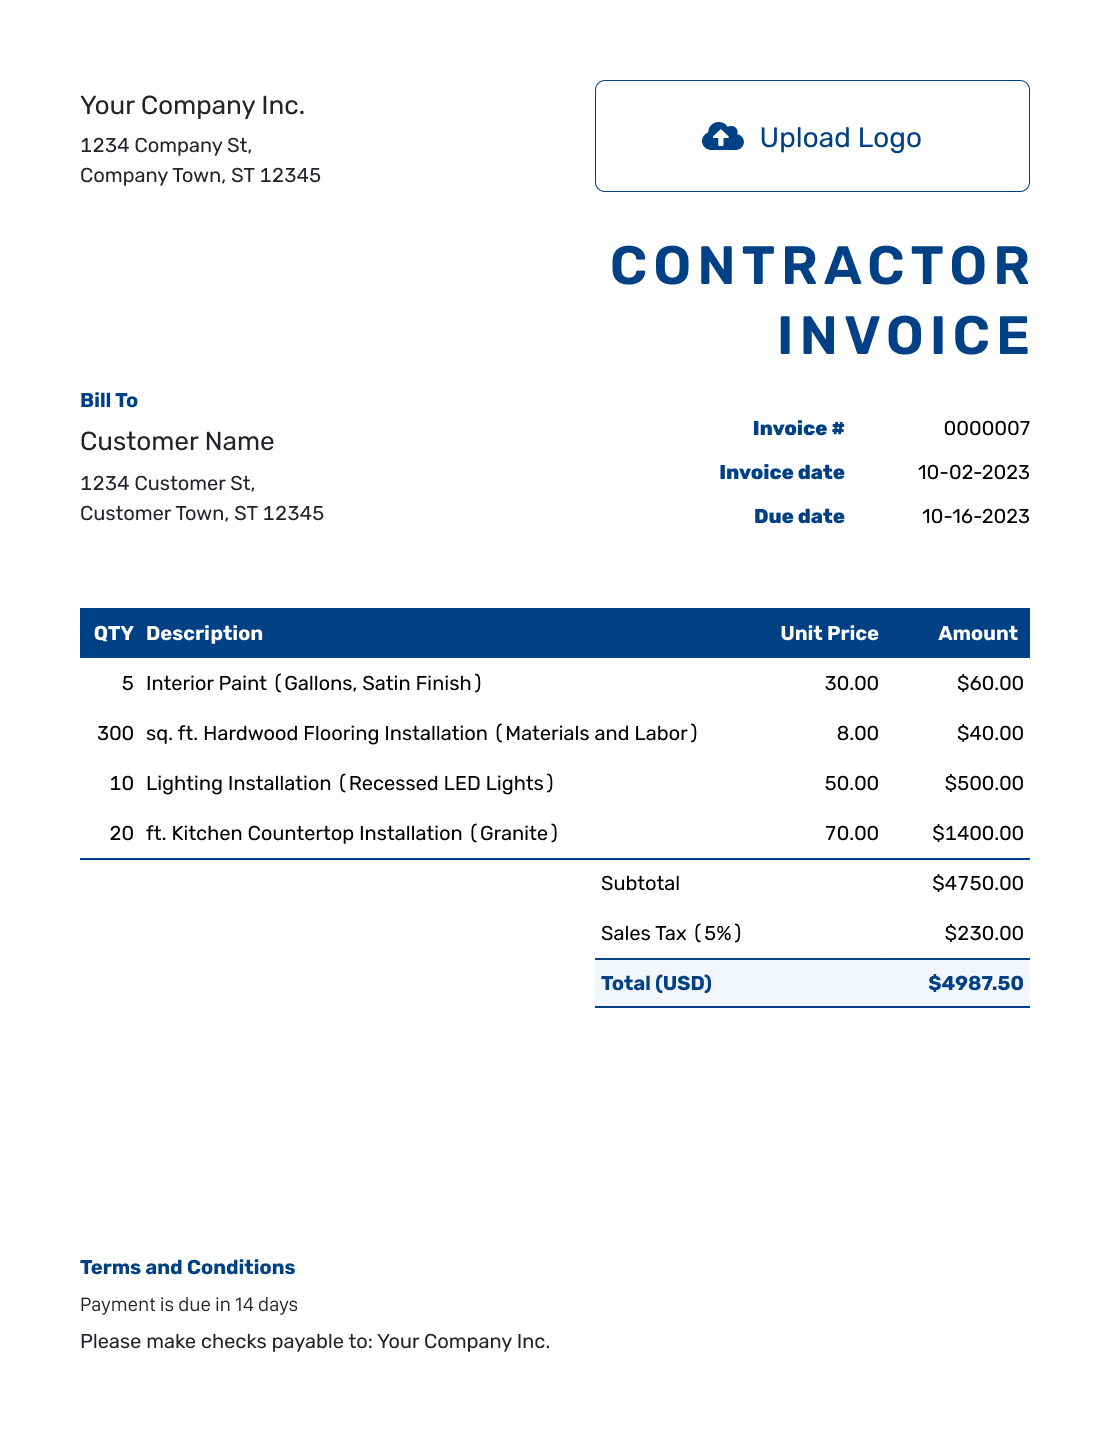 Sample Contractor Invoice Template